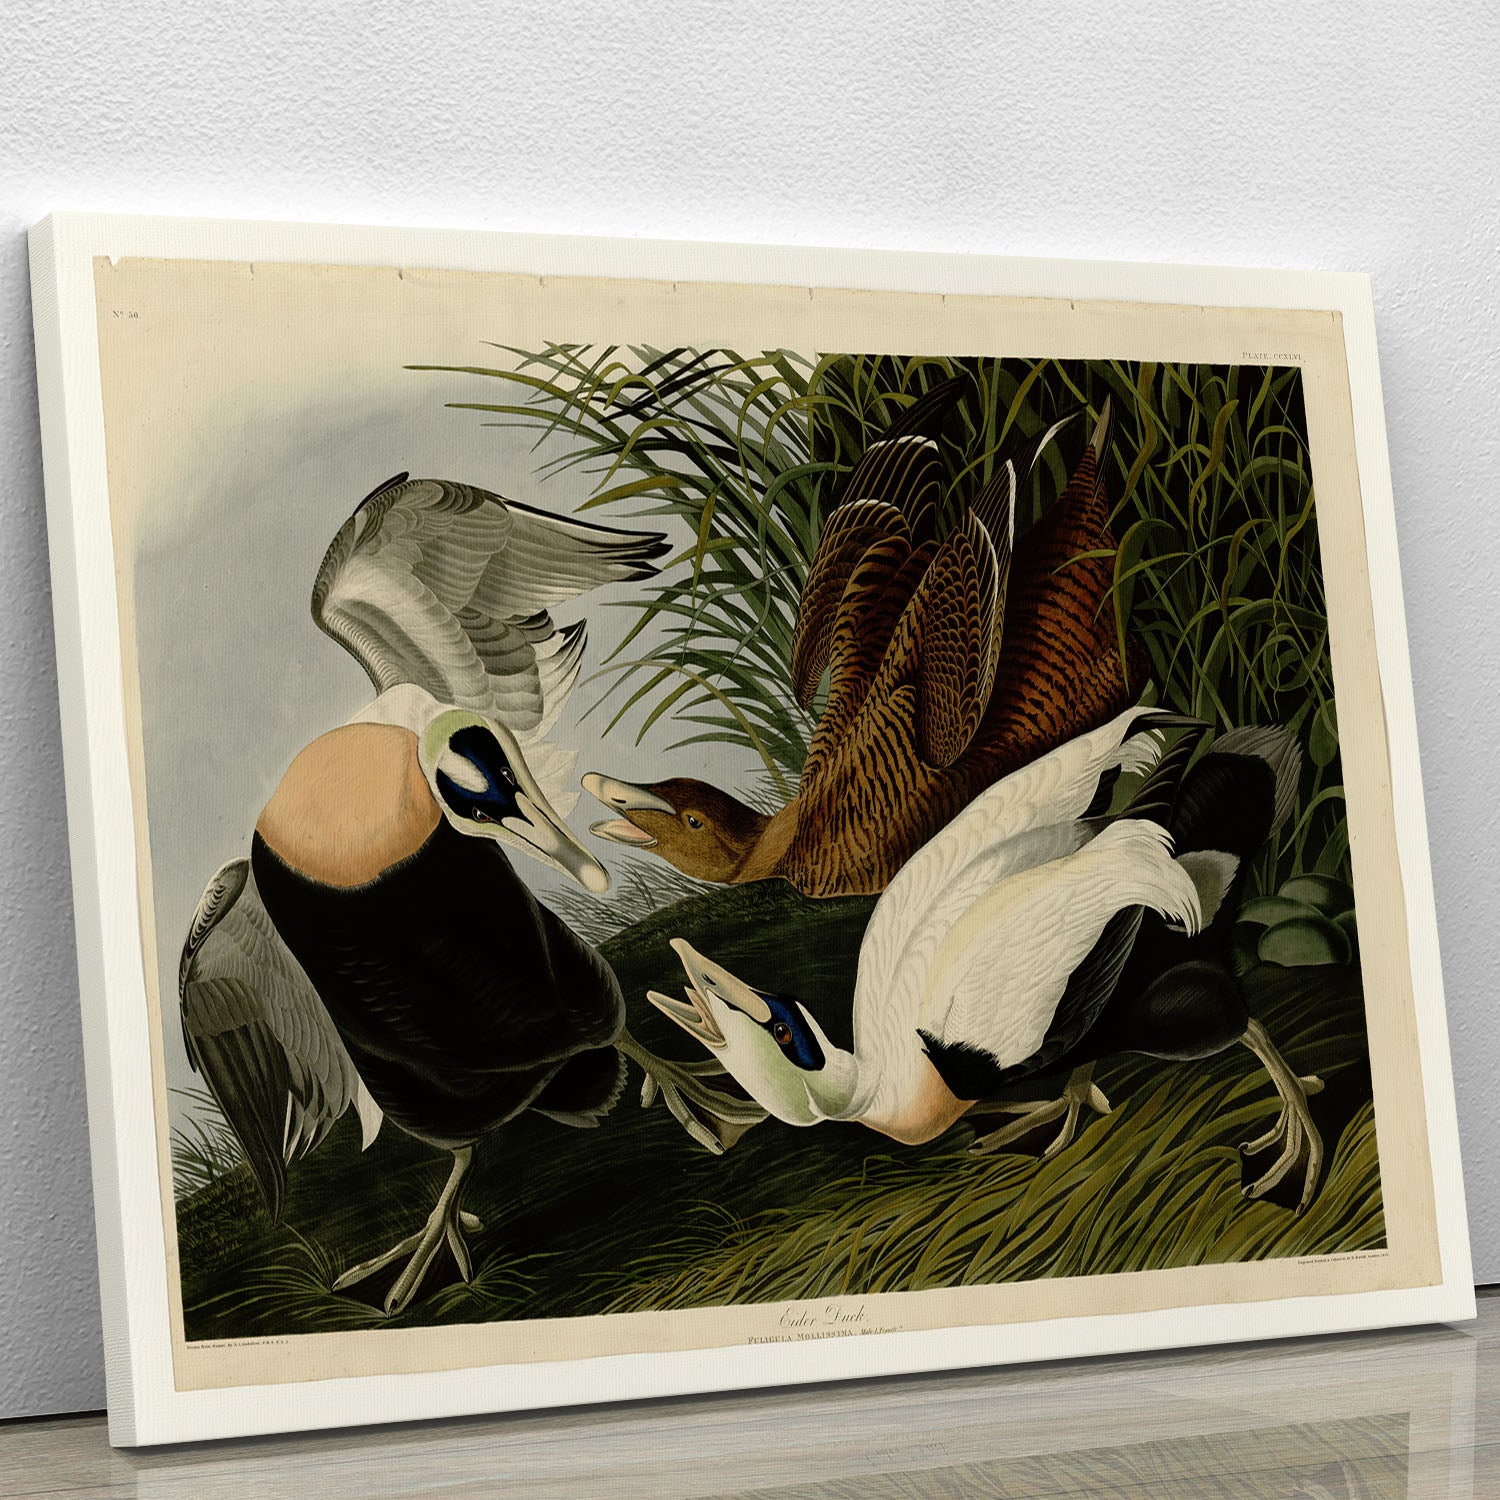 Eider Duck by Audubon Canvas Print or Poster - Canvas Art Rocks - 1